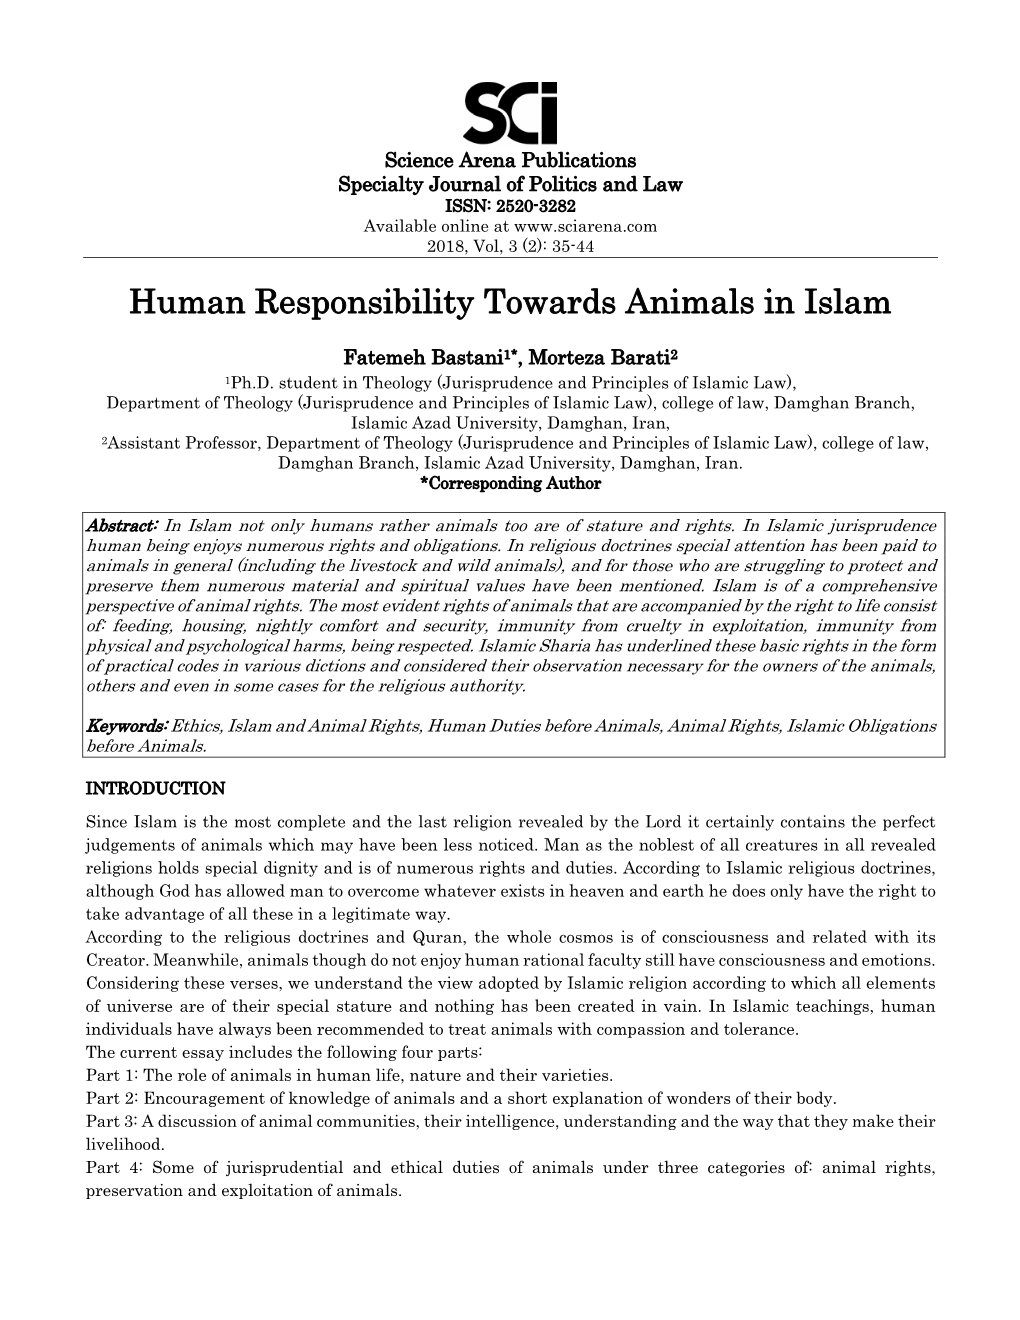 Human Responsibility Towards Animals in Islam